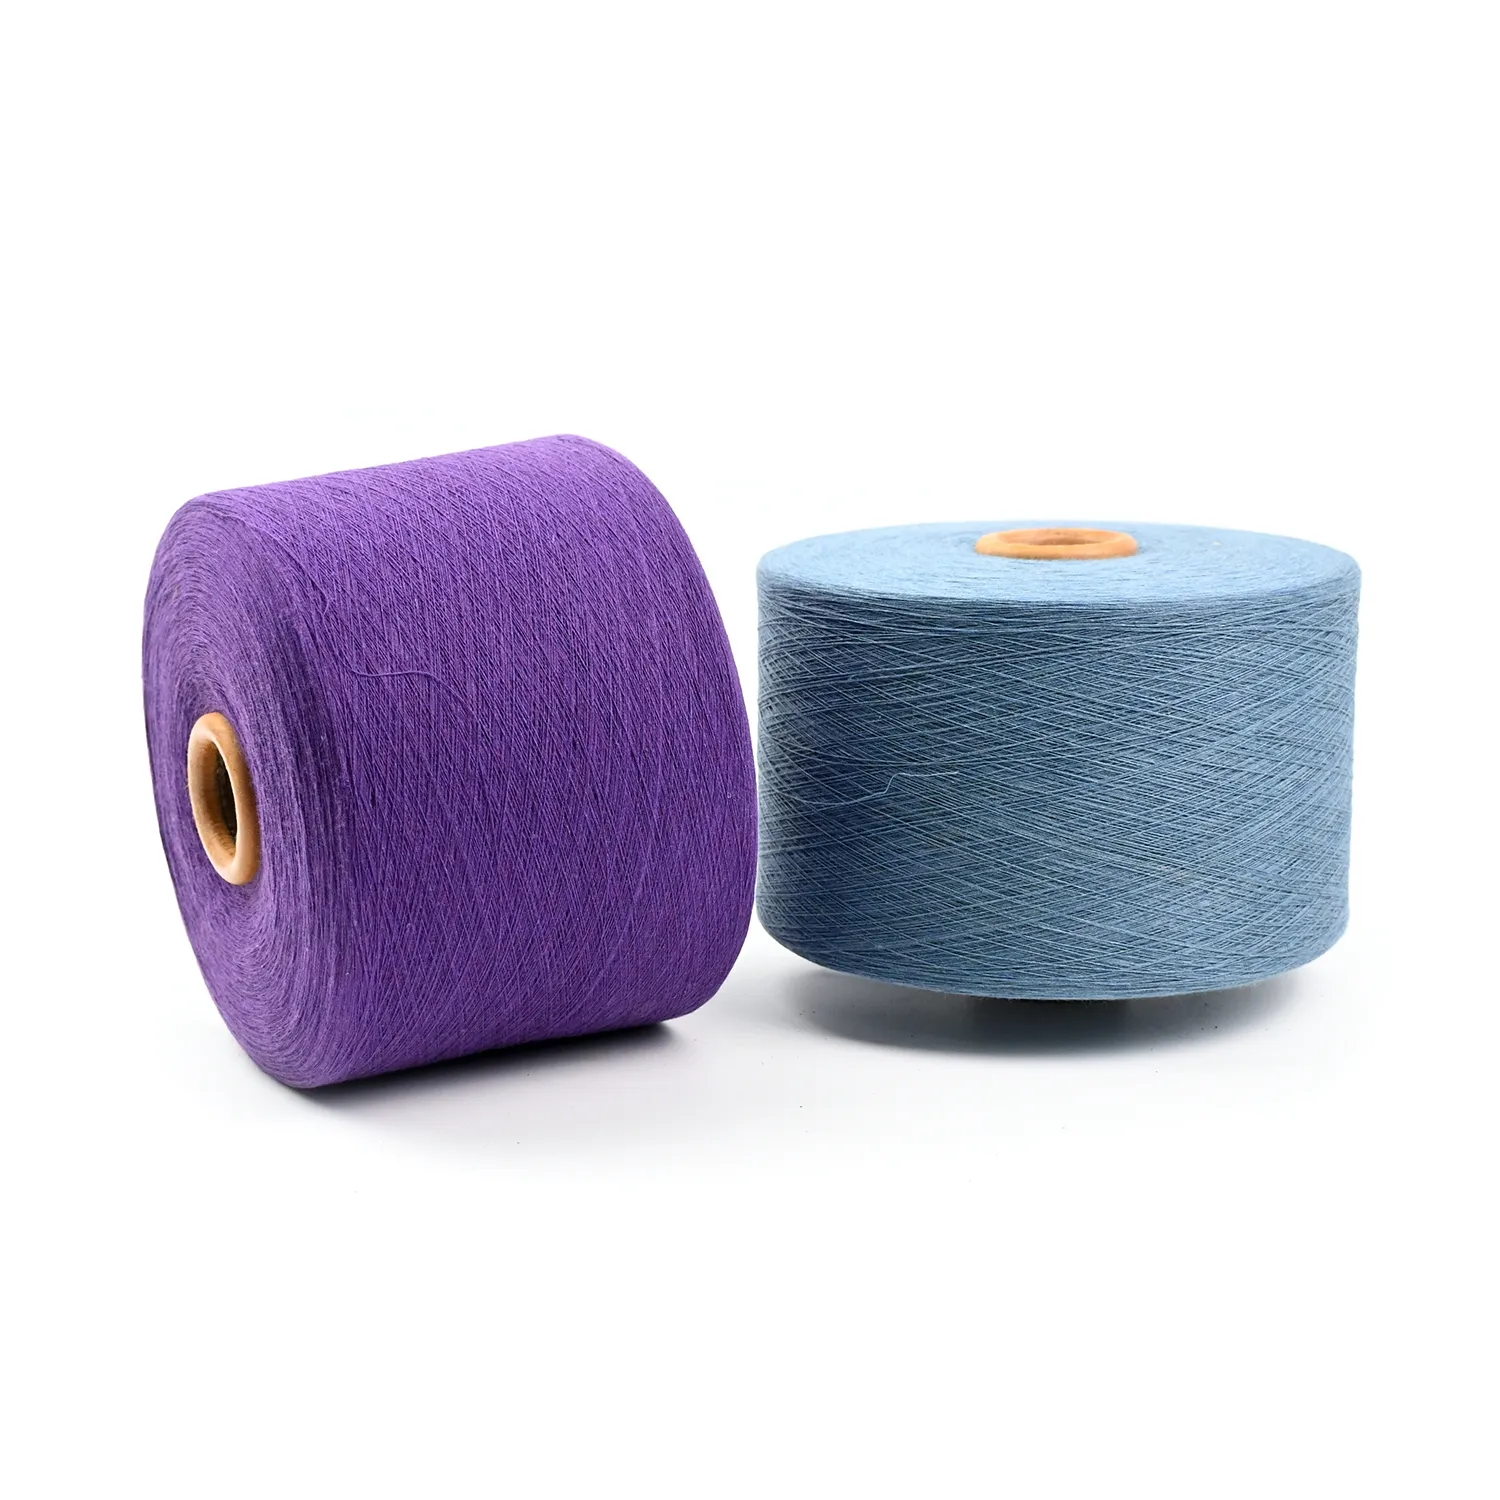 High Quality Recycled Cotton Yarn Navy Yarn Sold In Turkey